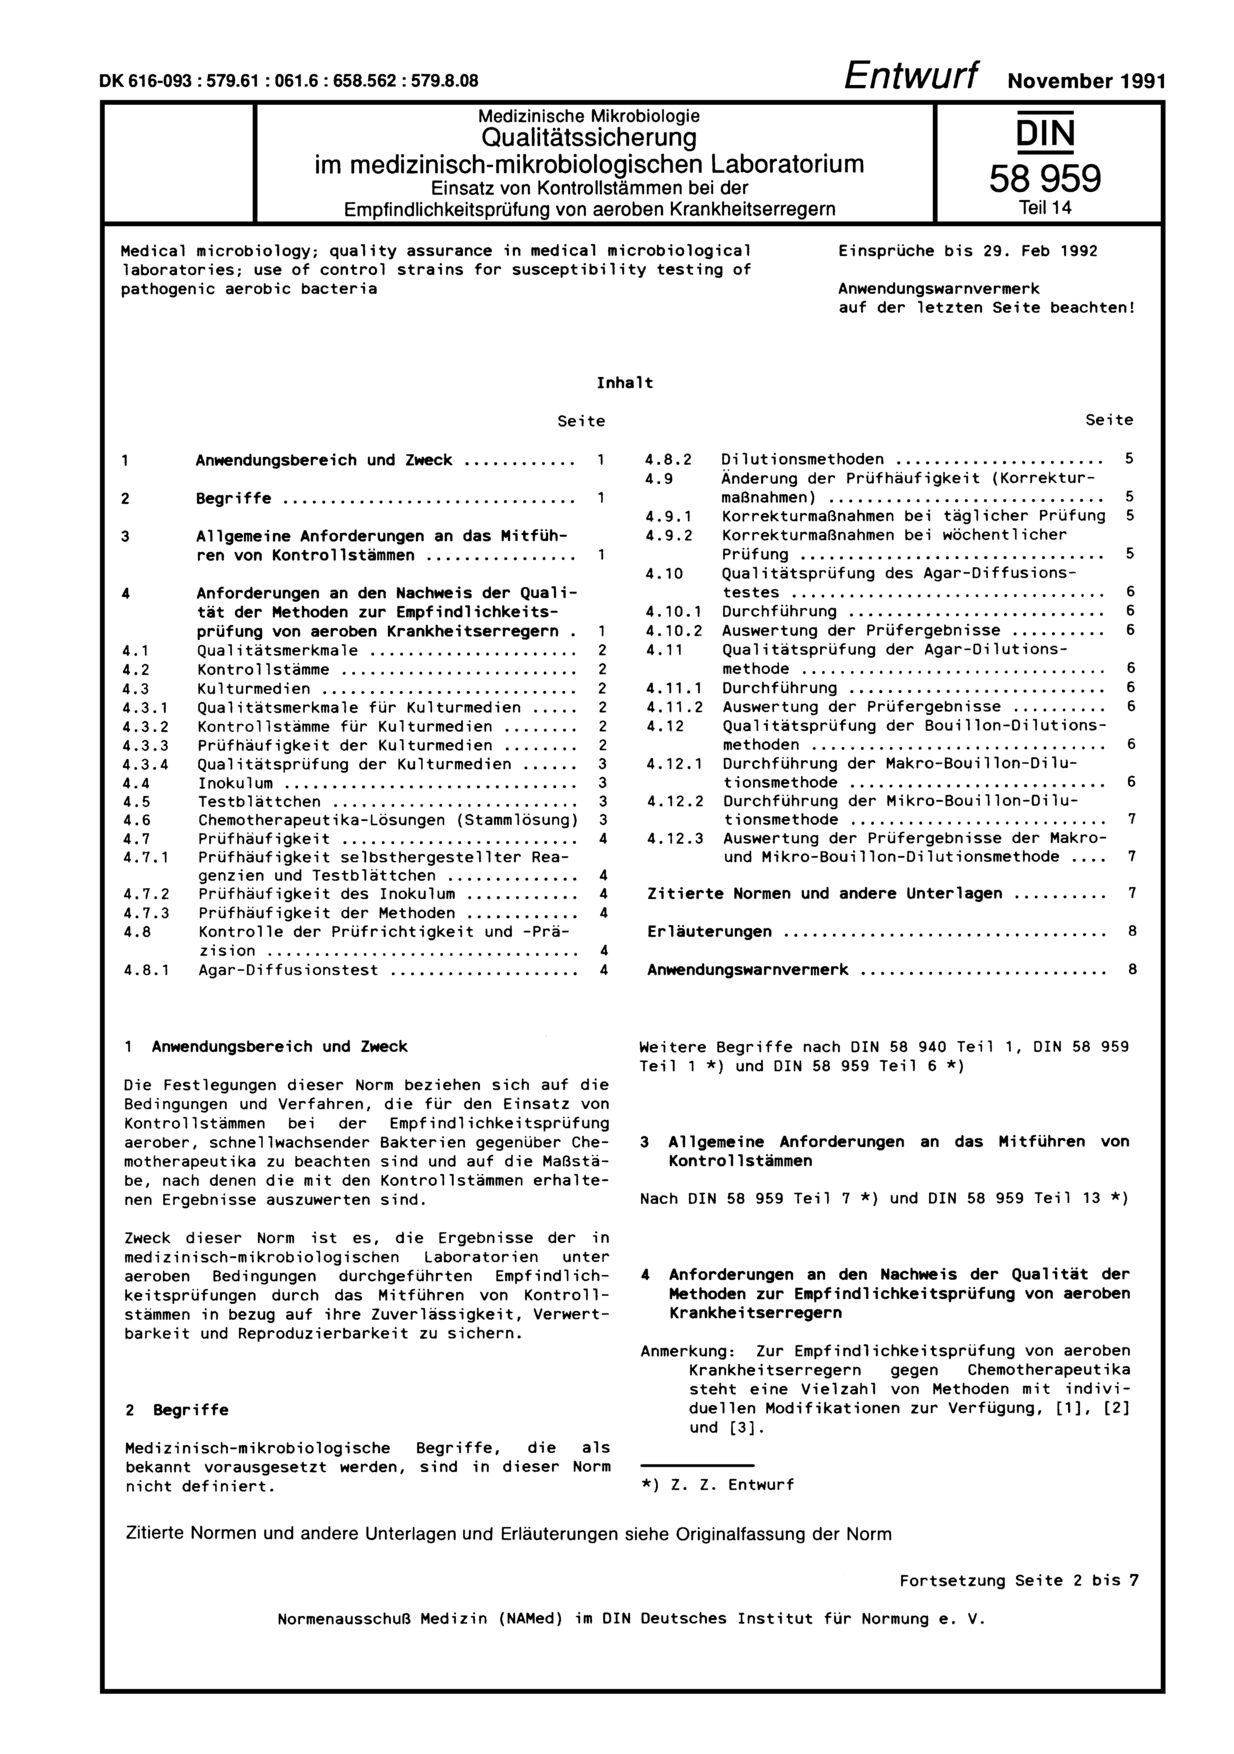 DIN 58959-14 E:1991-11封面图